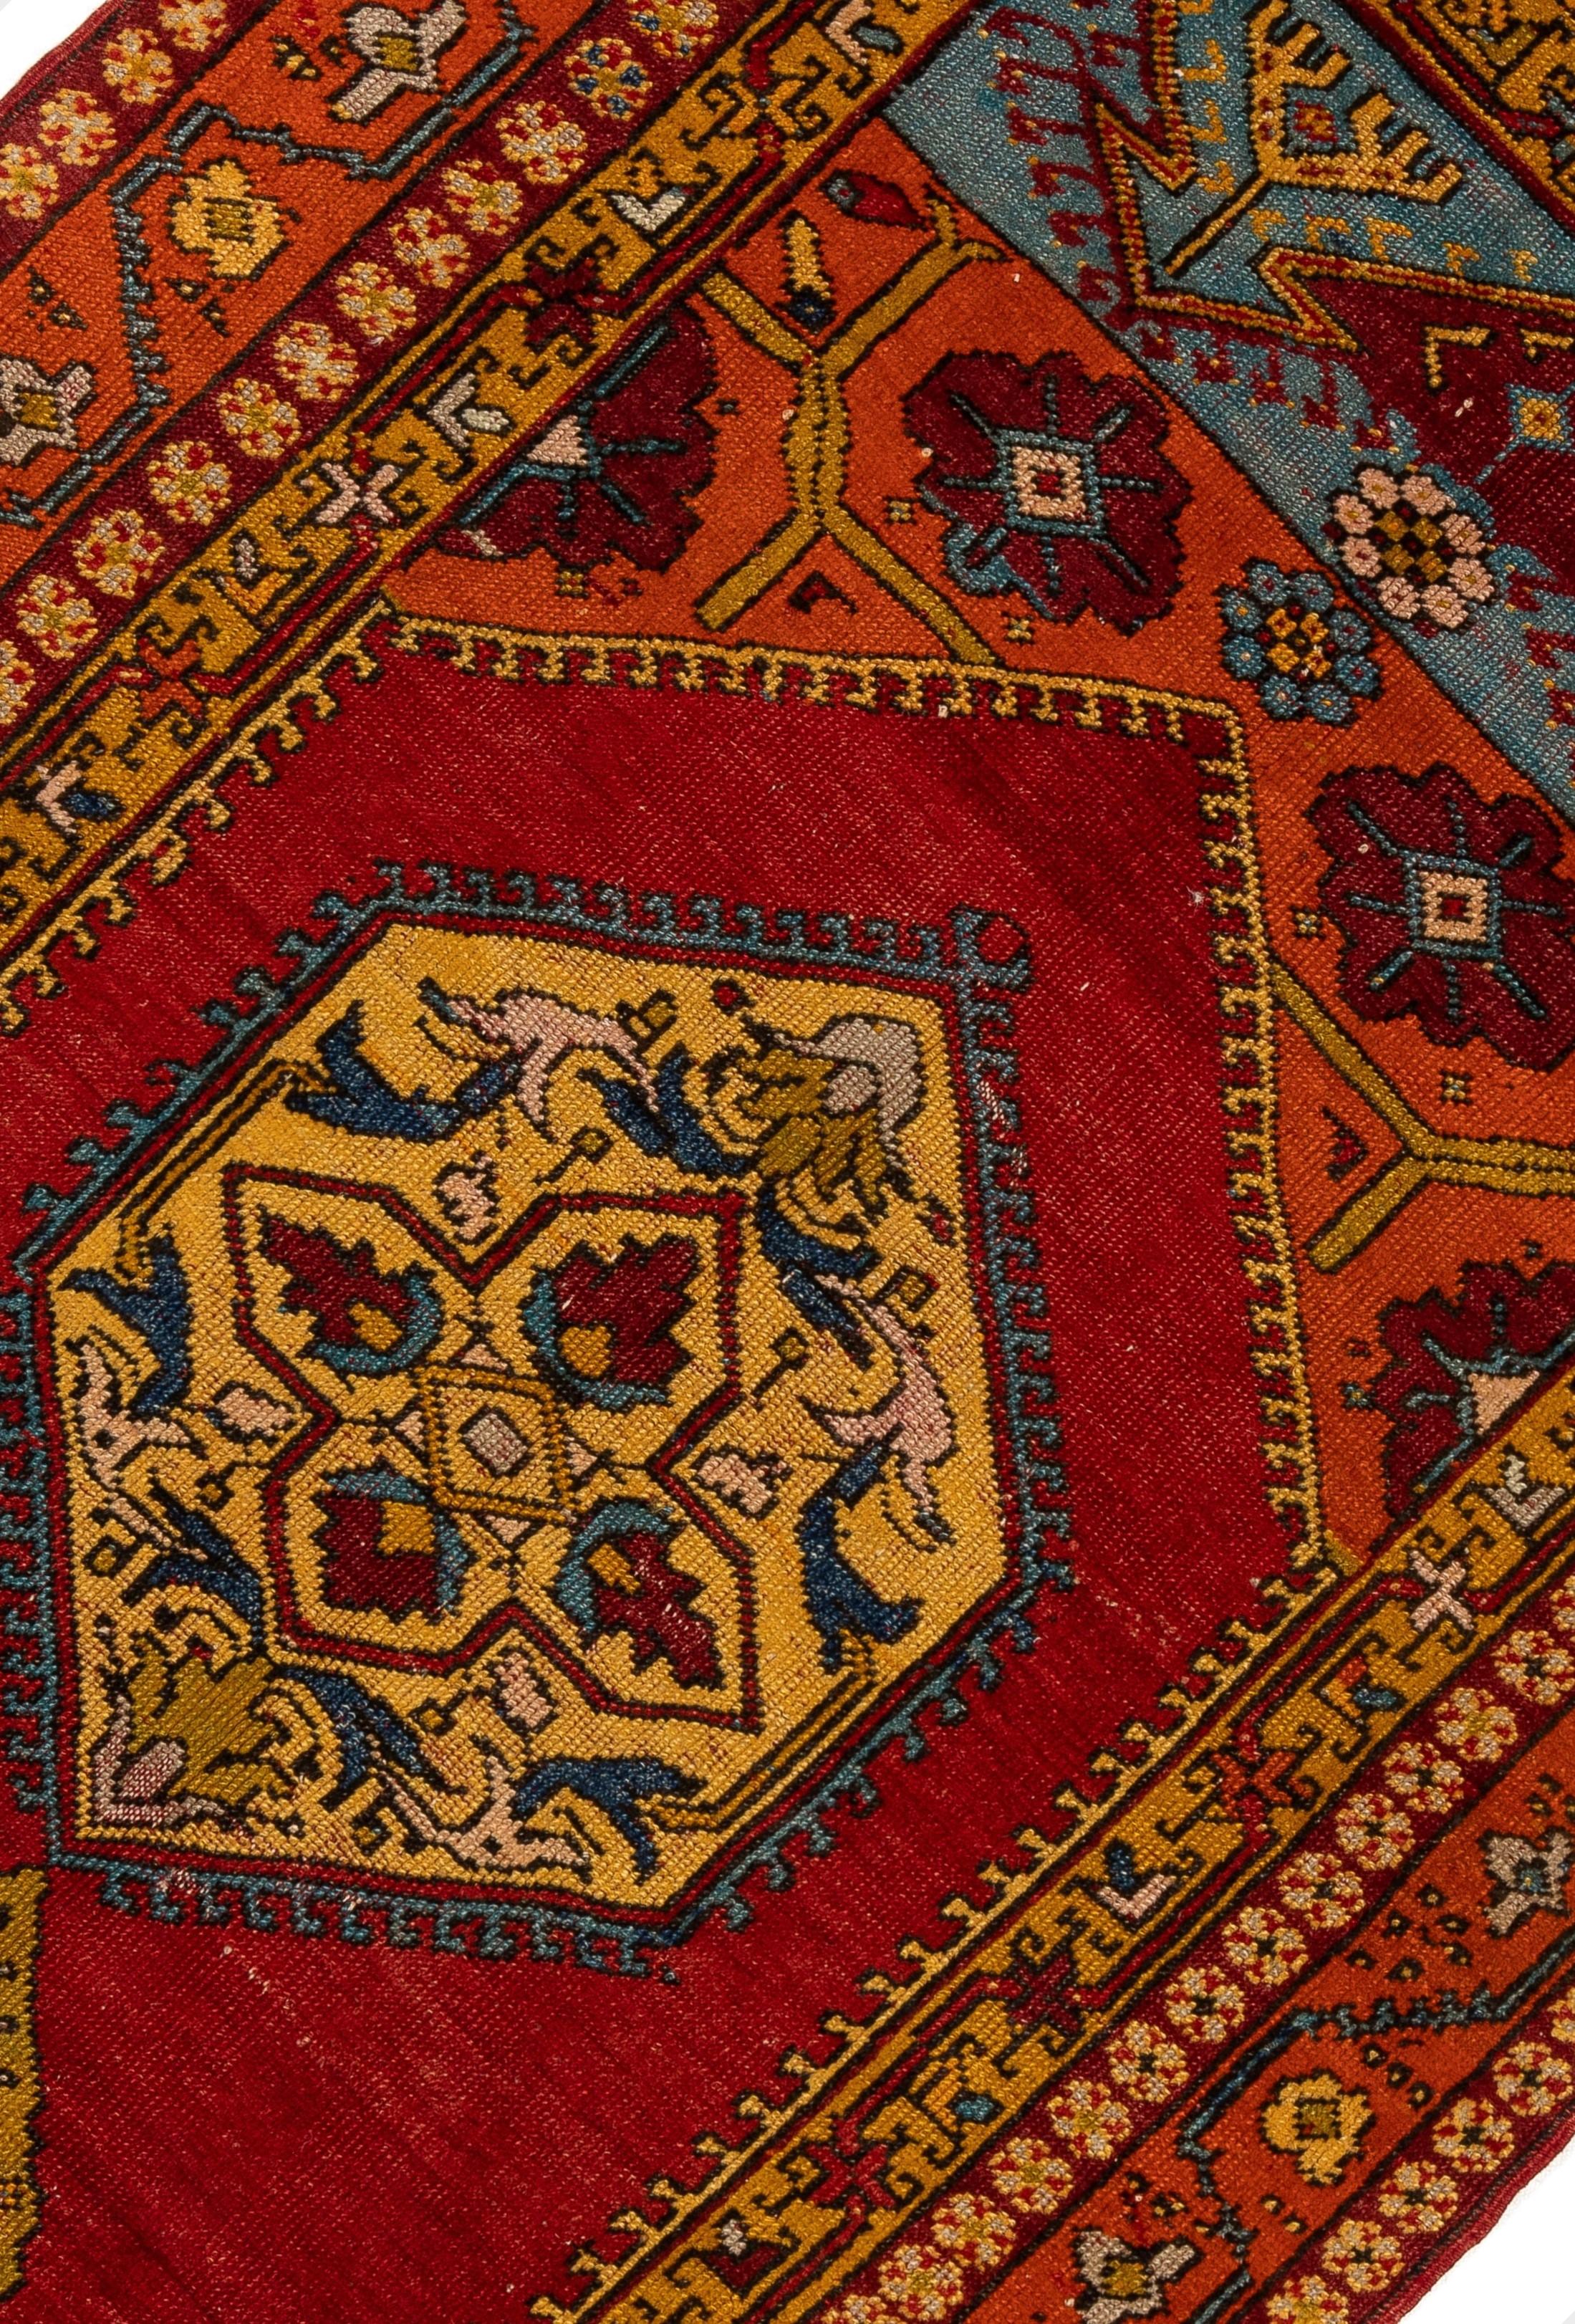 Turkish Antique Central Anatolian Prayer Rug, circa 1900 For Sale